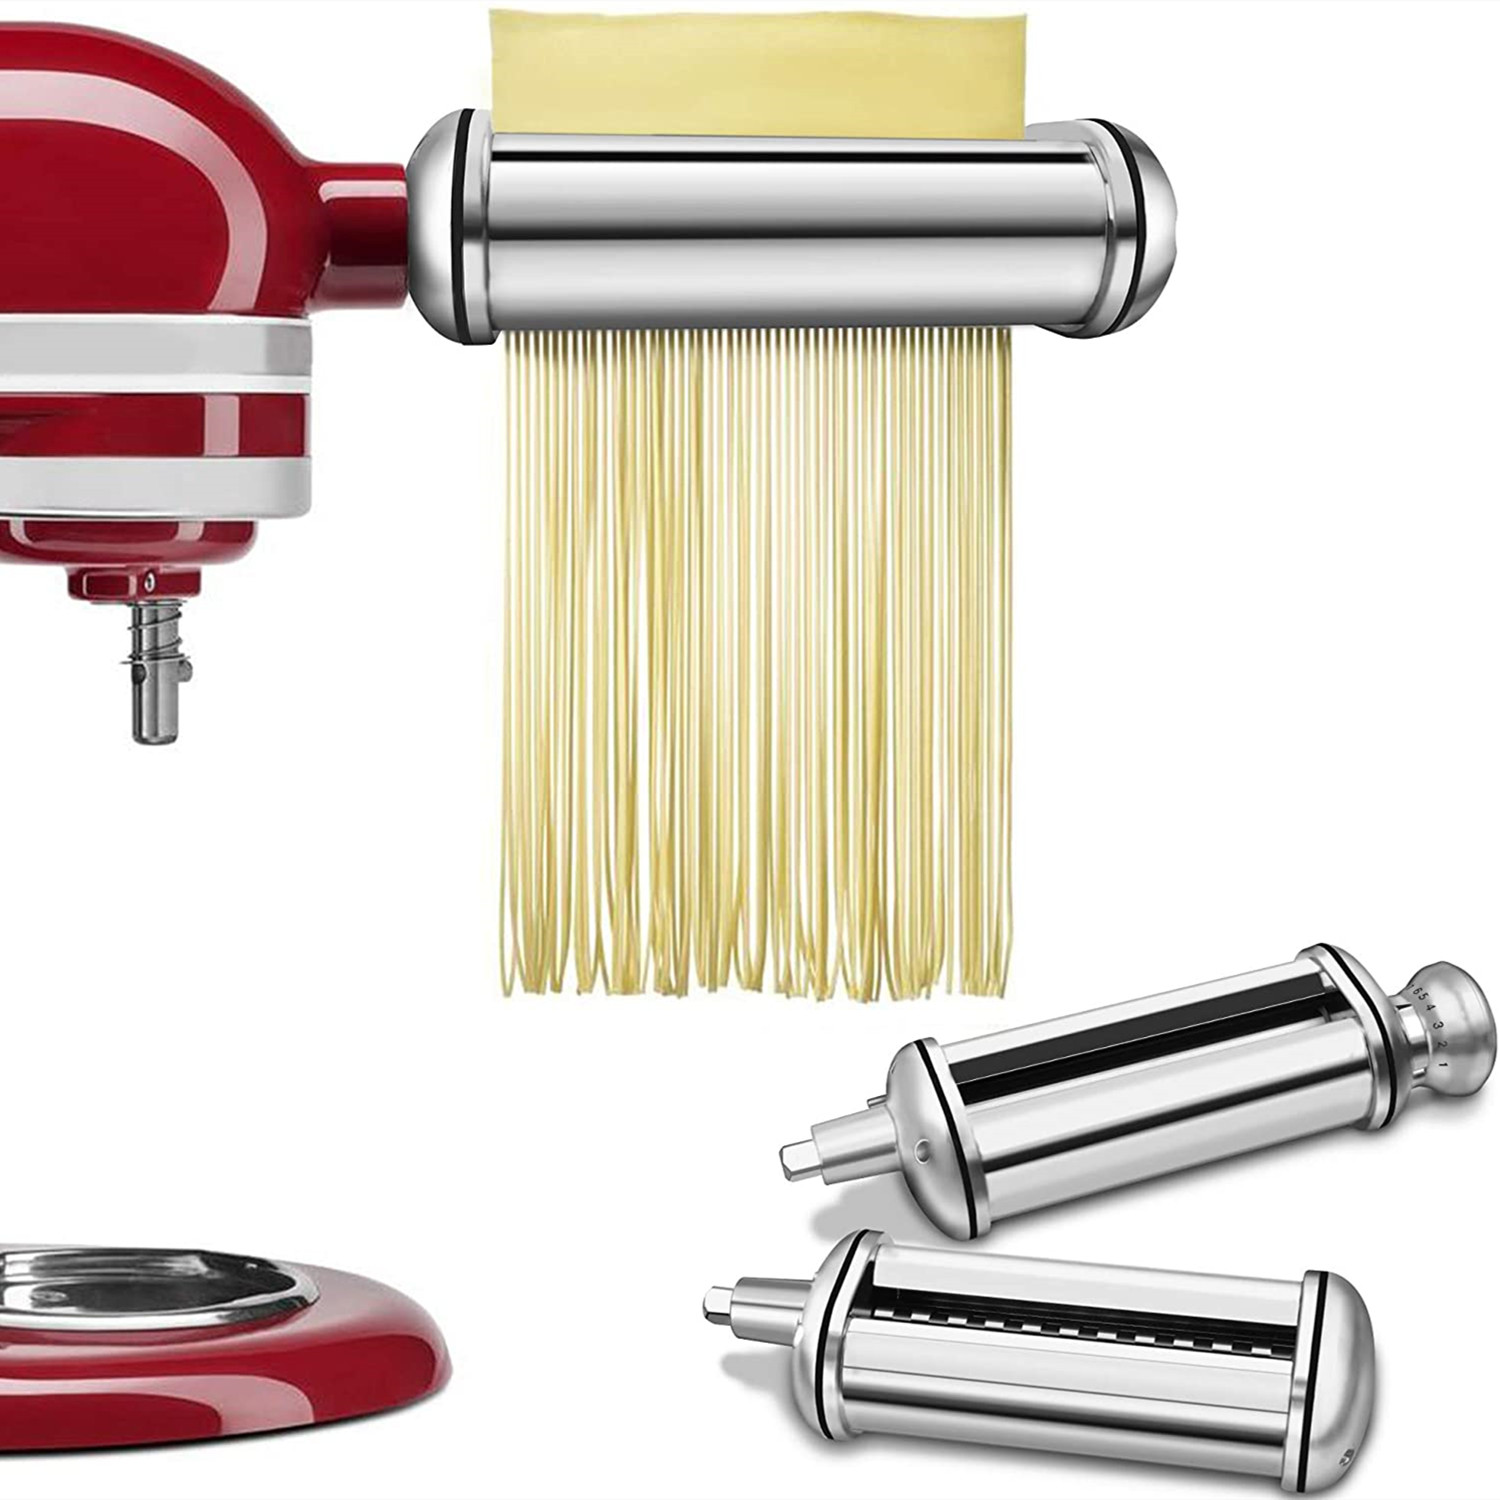 Kenome Pasta Roller Attachments Set for All KitchenAid Stand Mixer, Noodles Maker  Attachment, 3-Piece Pasta Cutter Accessories Set